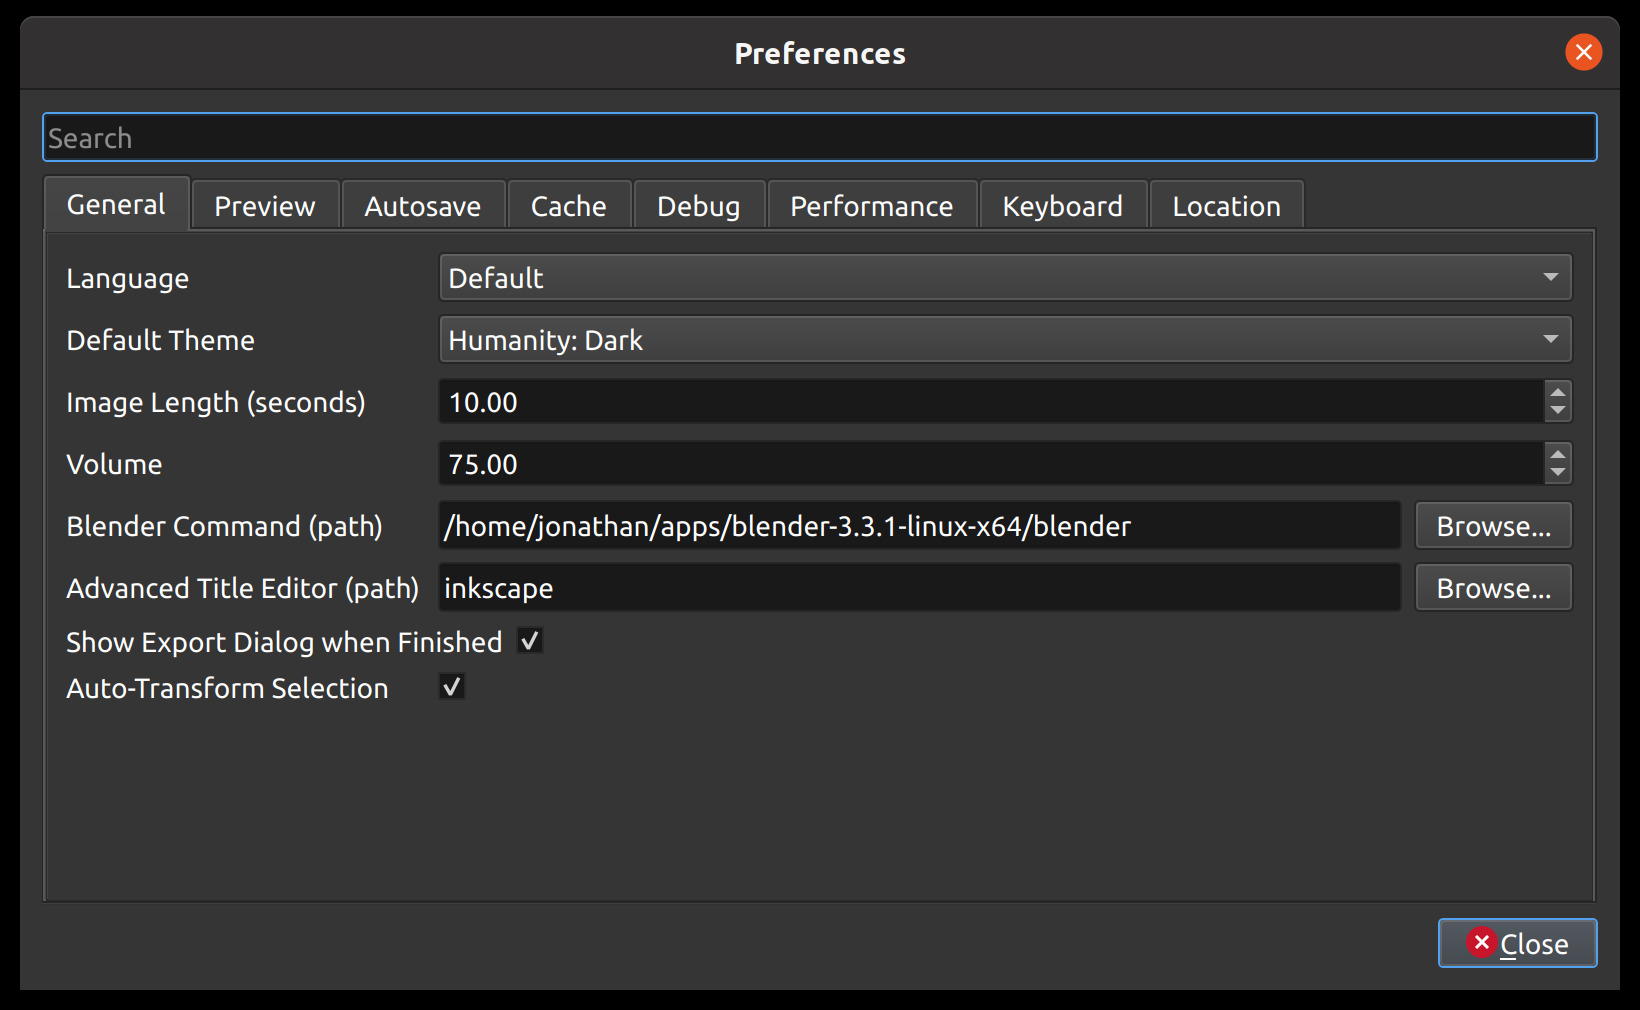 Preferences â€” OpenShot Video Editor 3.1.1 documentation